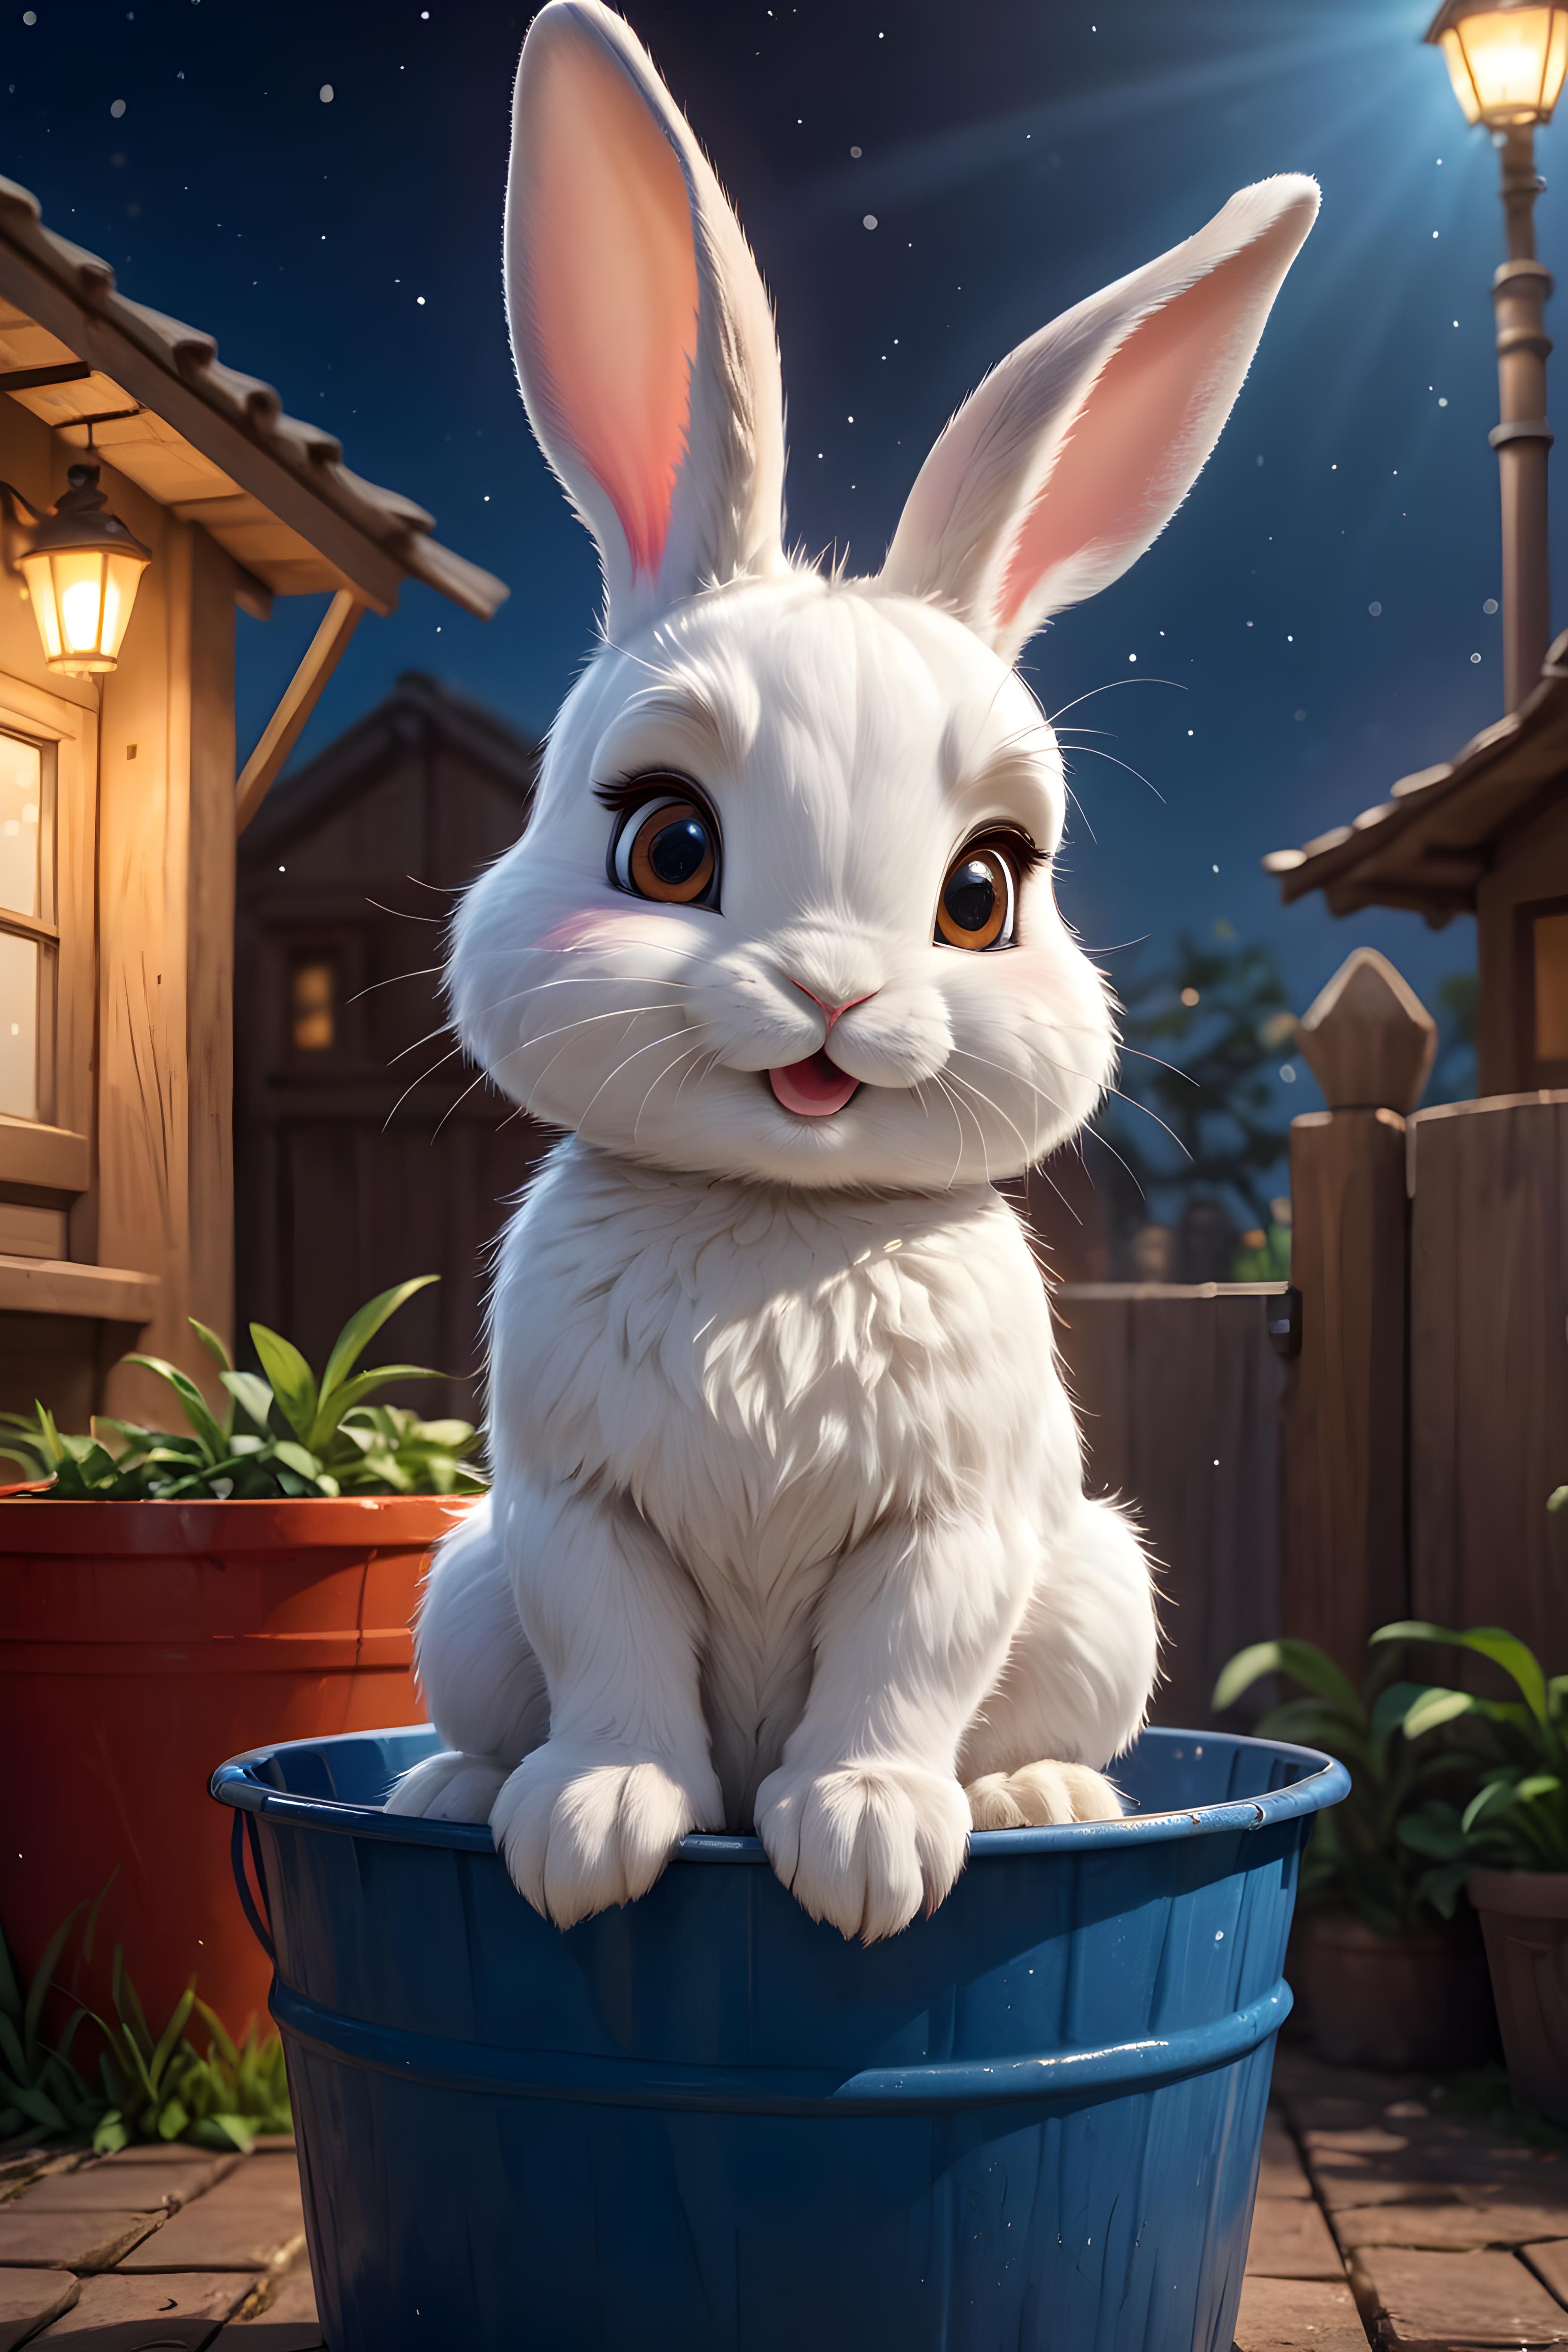 A cute white bunny rabbit sitting in a blue bucket.